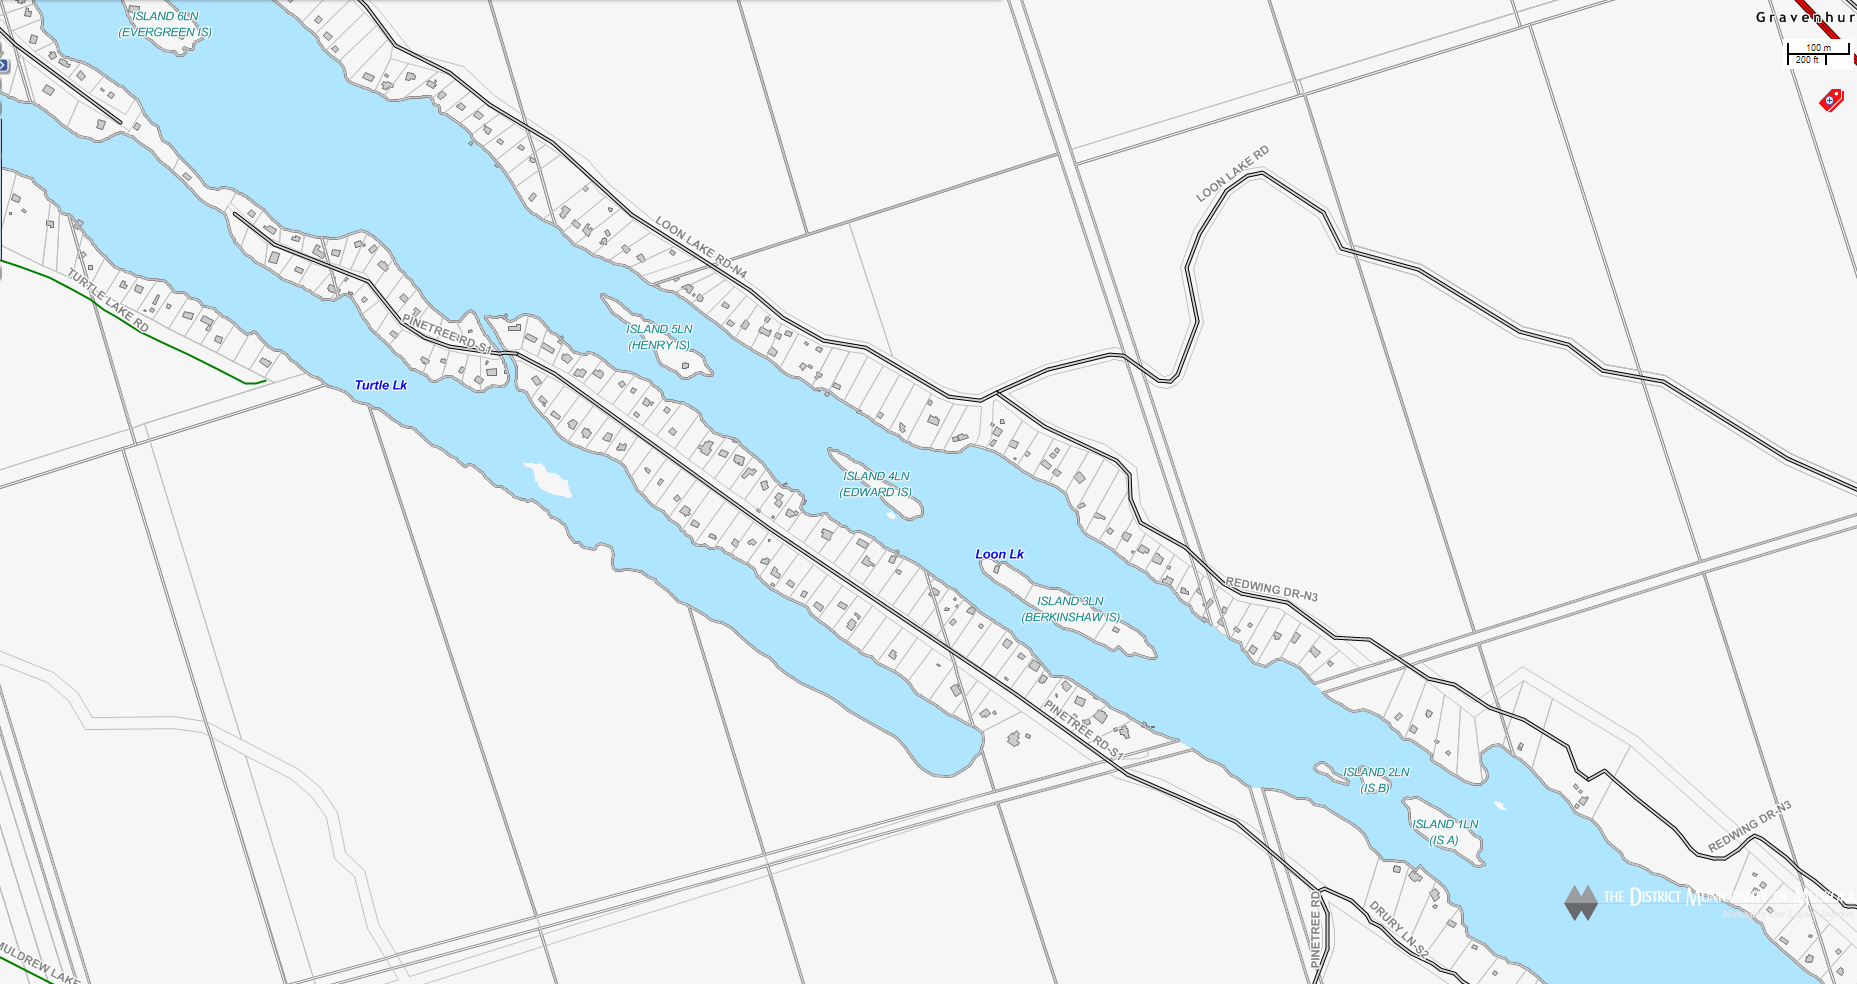 Chub Lake Cadastral Map - Chub Lake - Muskoka